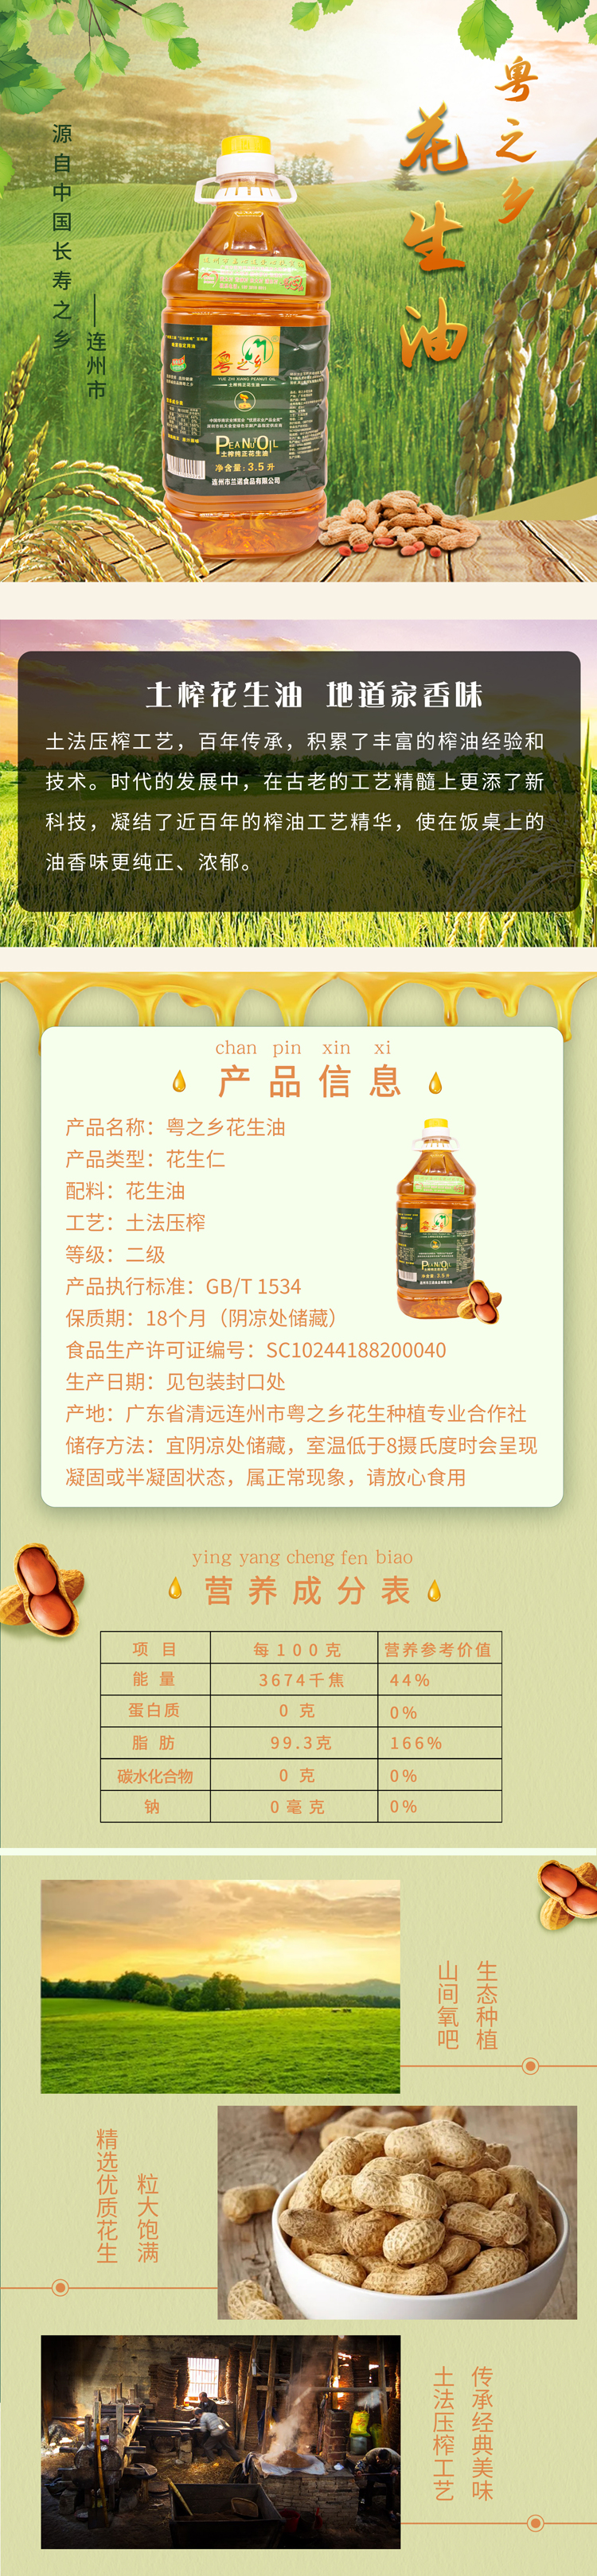 http://b2bwings-goods-image.oss-cn-shenzhen.aliyuncs.com/49680616-1199-4e9f-b0d8-1e7773a426b1.png